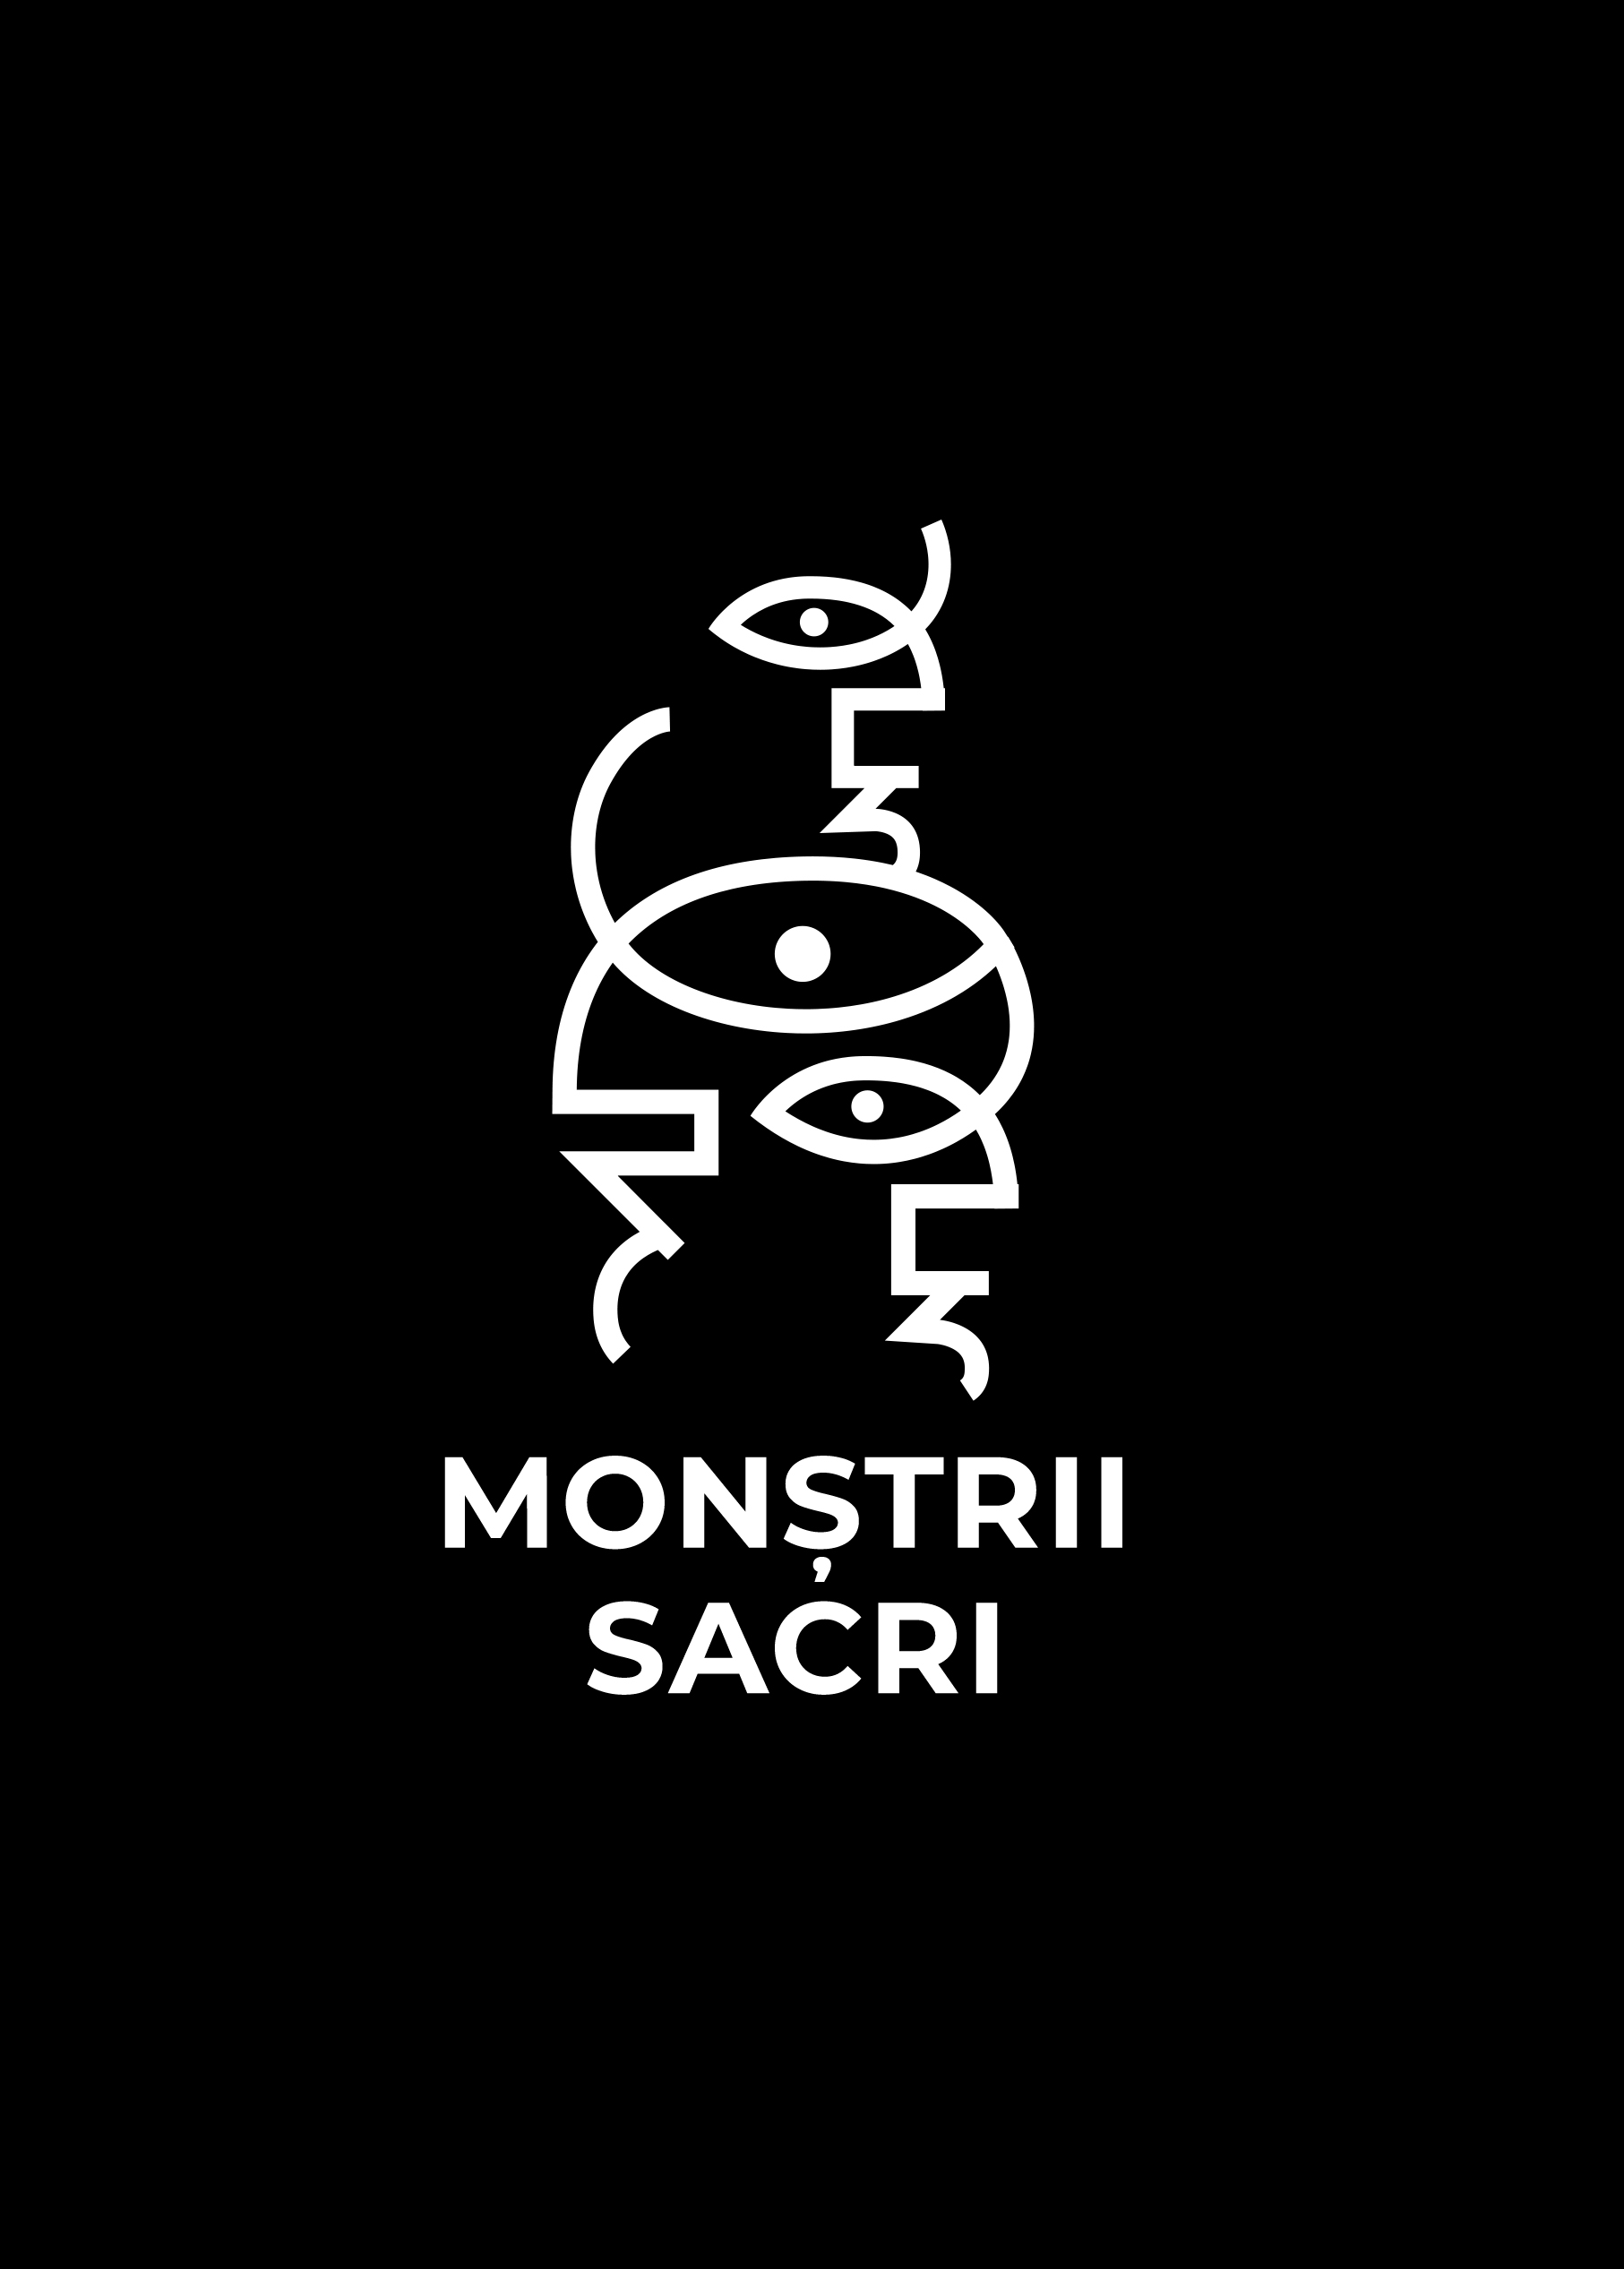 Monstrii Sacri logo